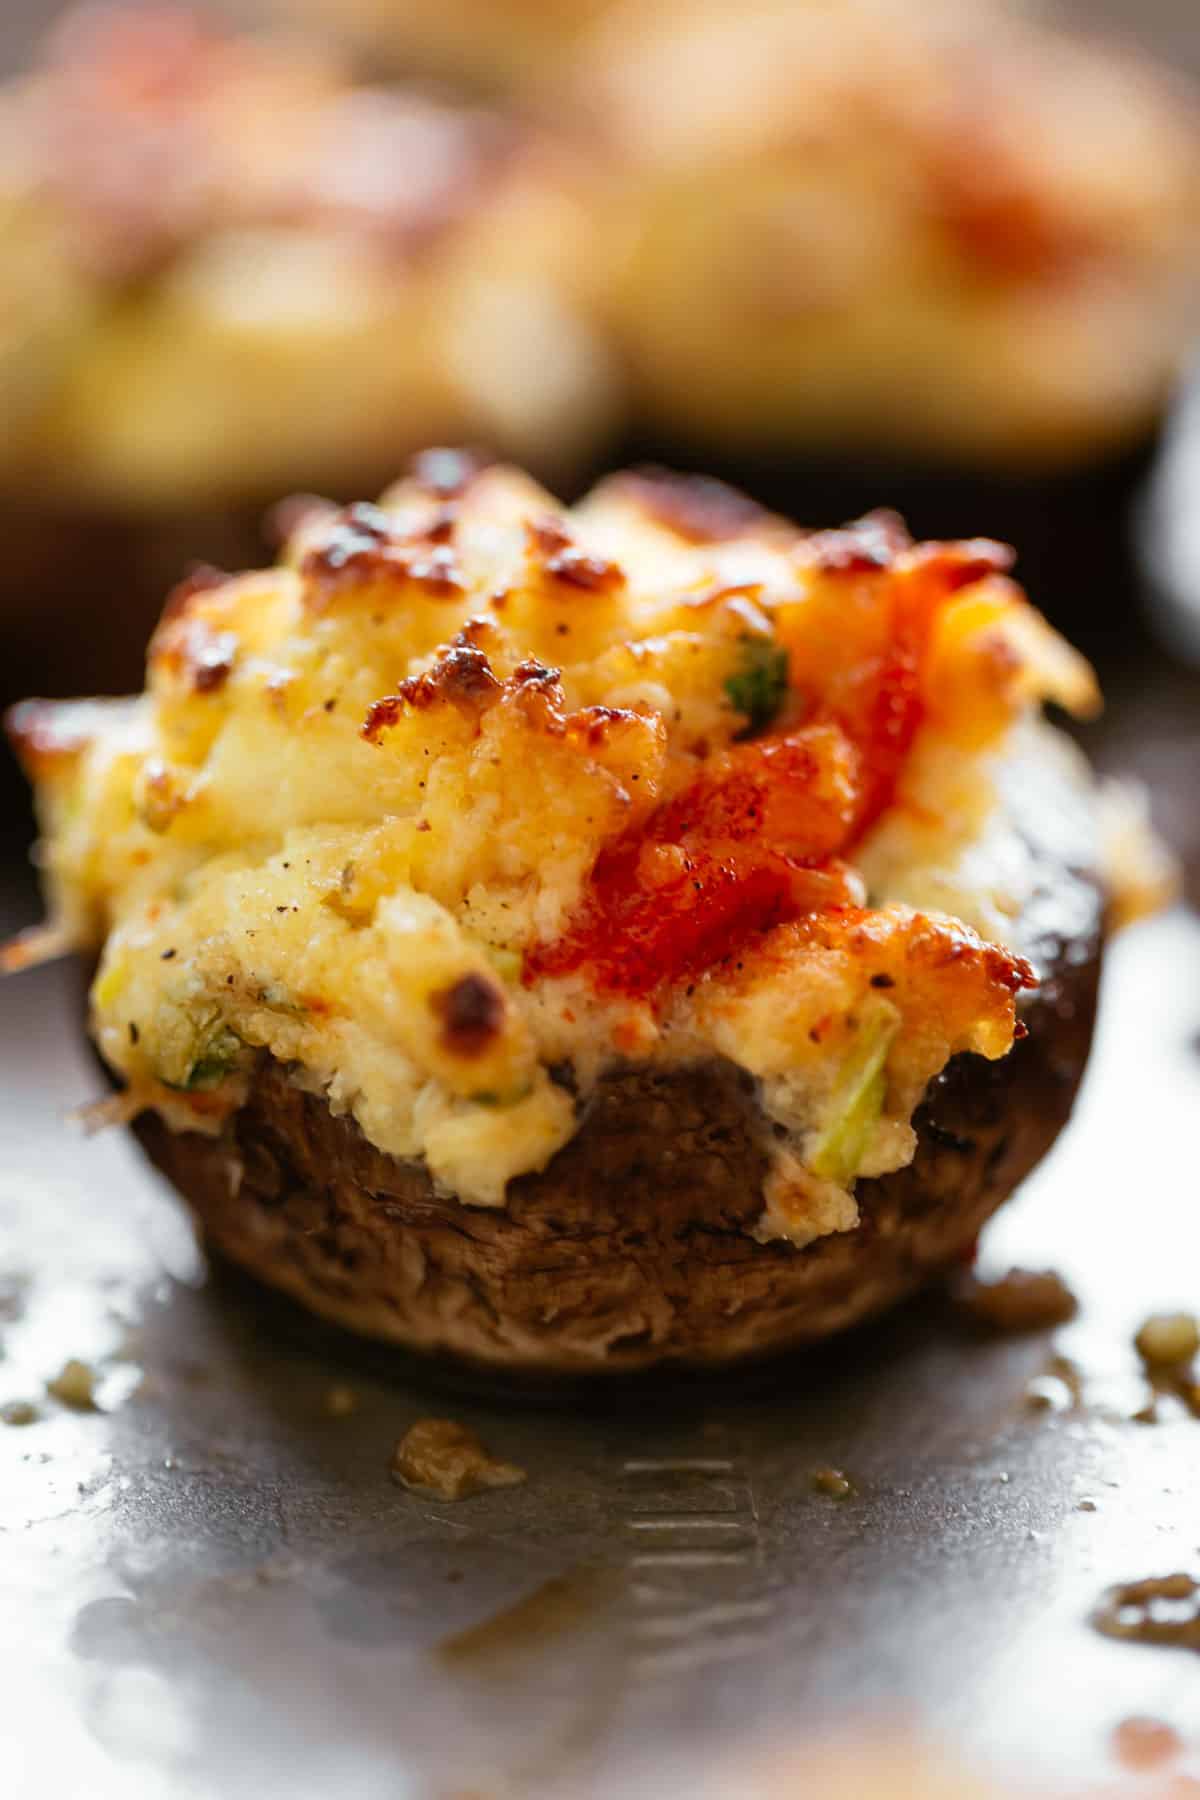 Crab stuffed mushrooms are a hit! #stuffedmushrooms #appetizers #newyears